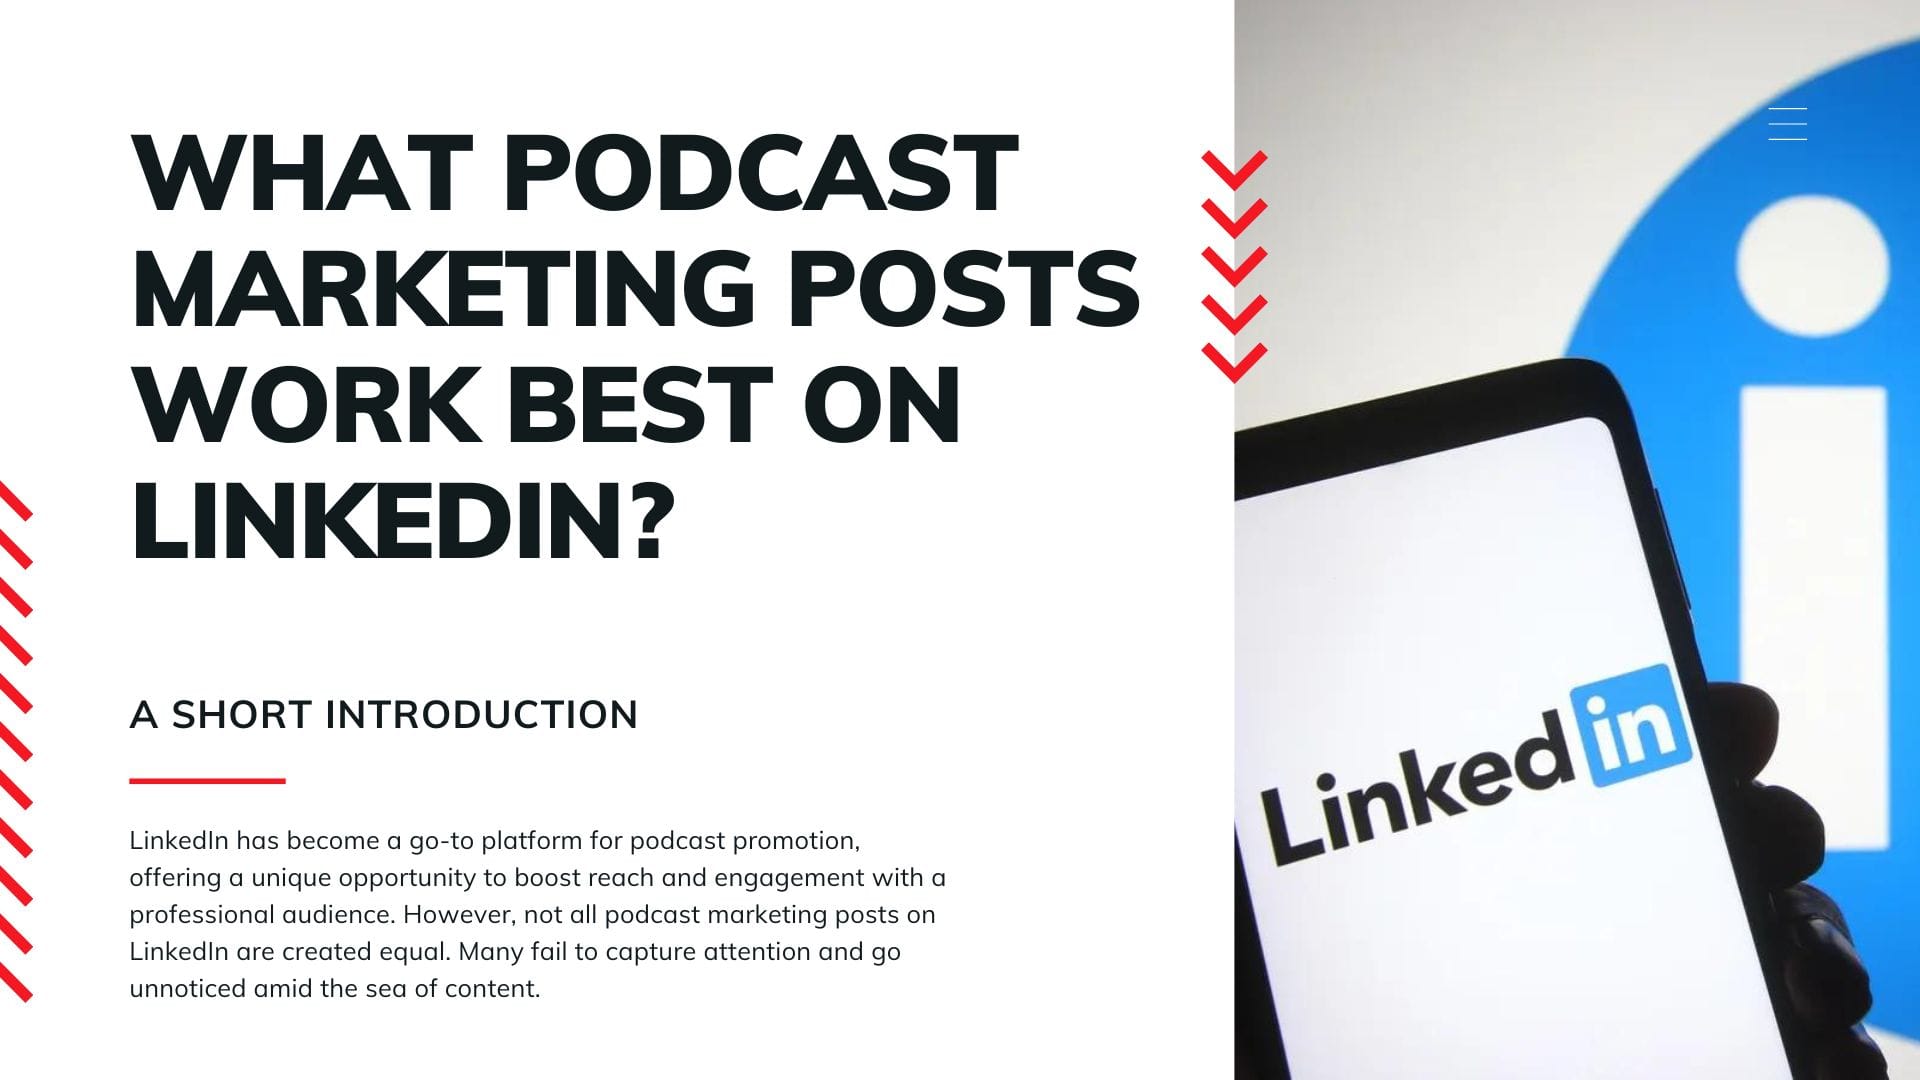 What Podcast Marketing Posts Work Best on LinkedIn?